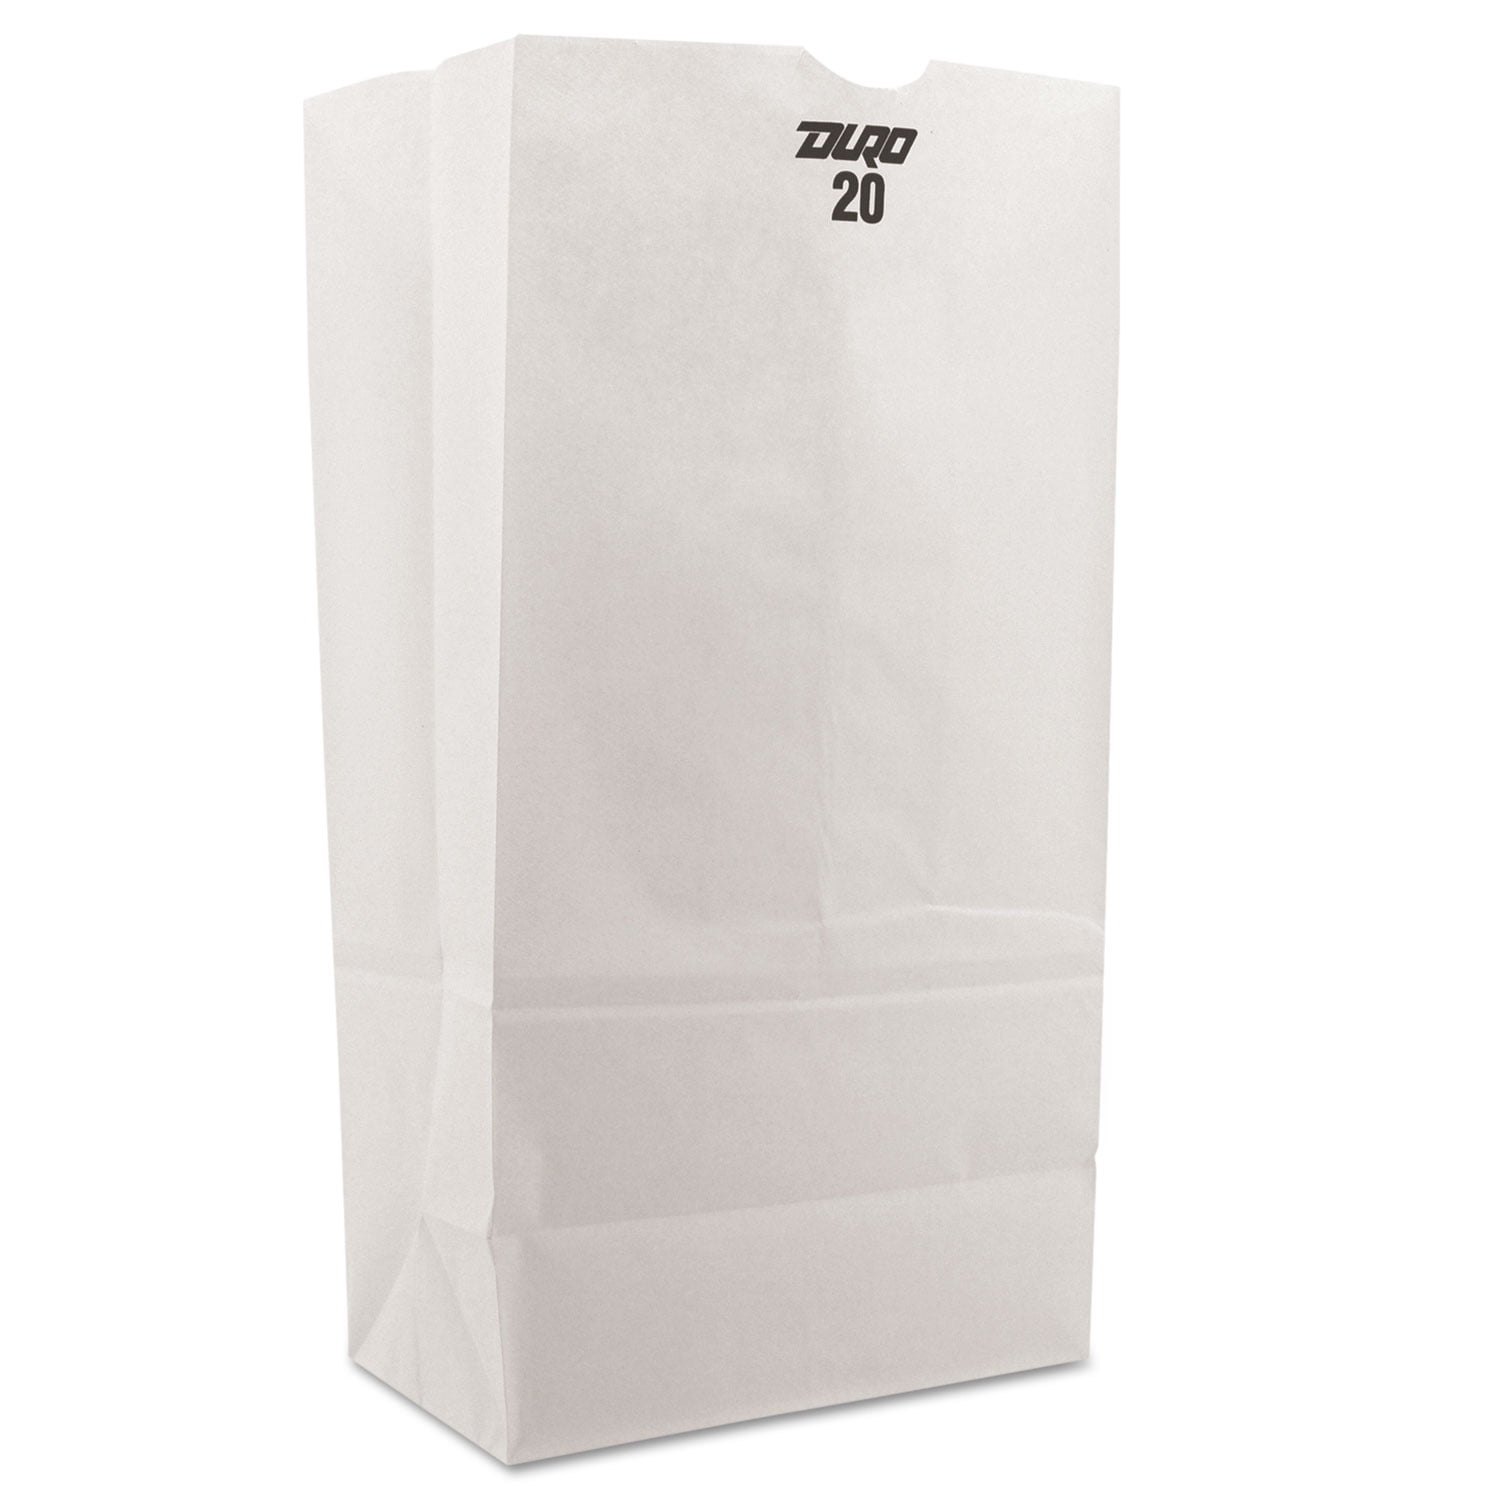 General Grocery Paper Bags, #20, 8.25 x 5.94 x 16.13, Kraft, 500 Bags